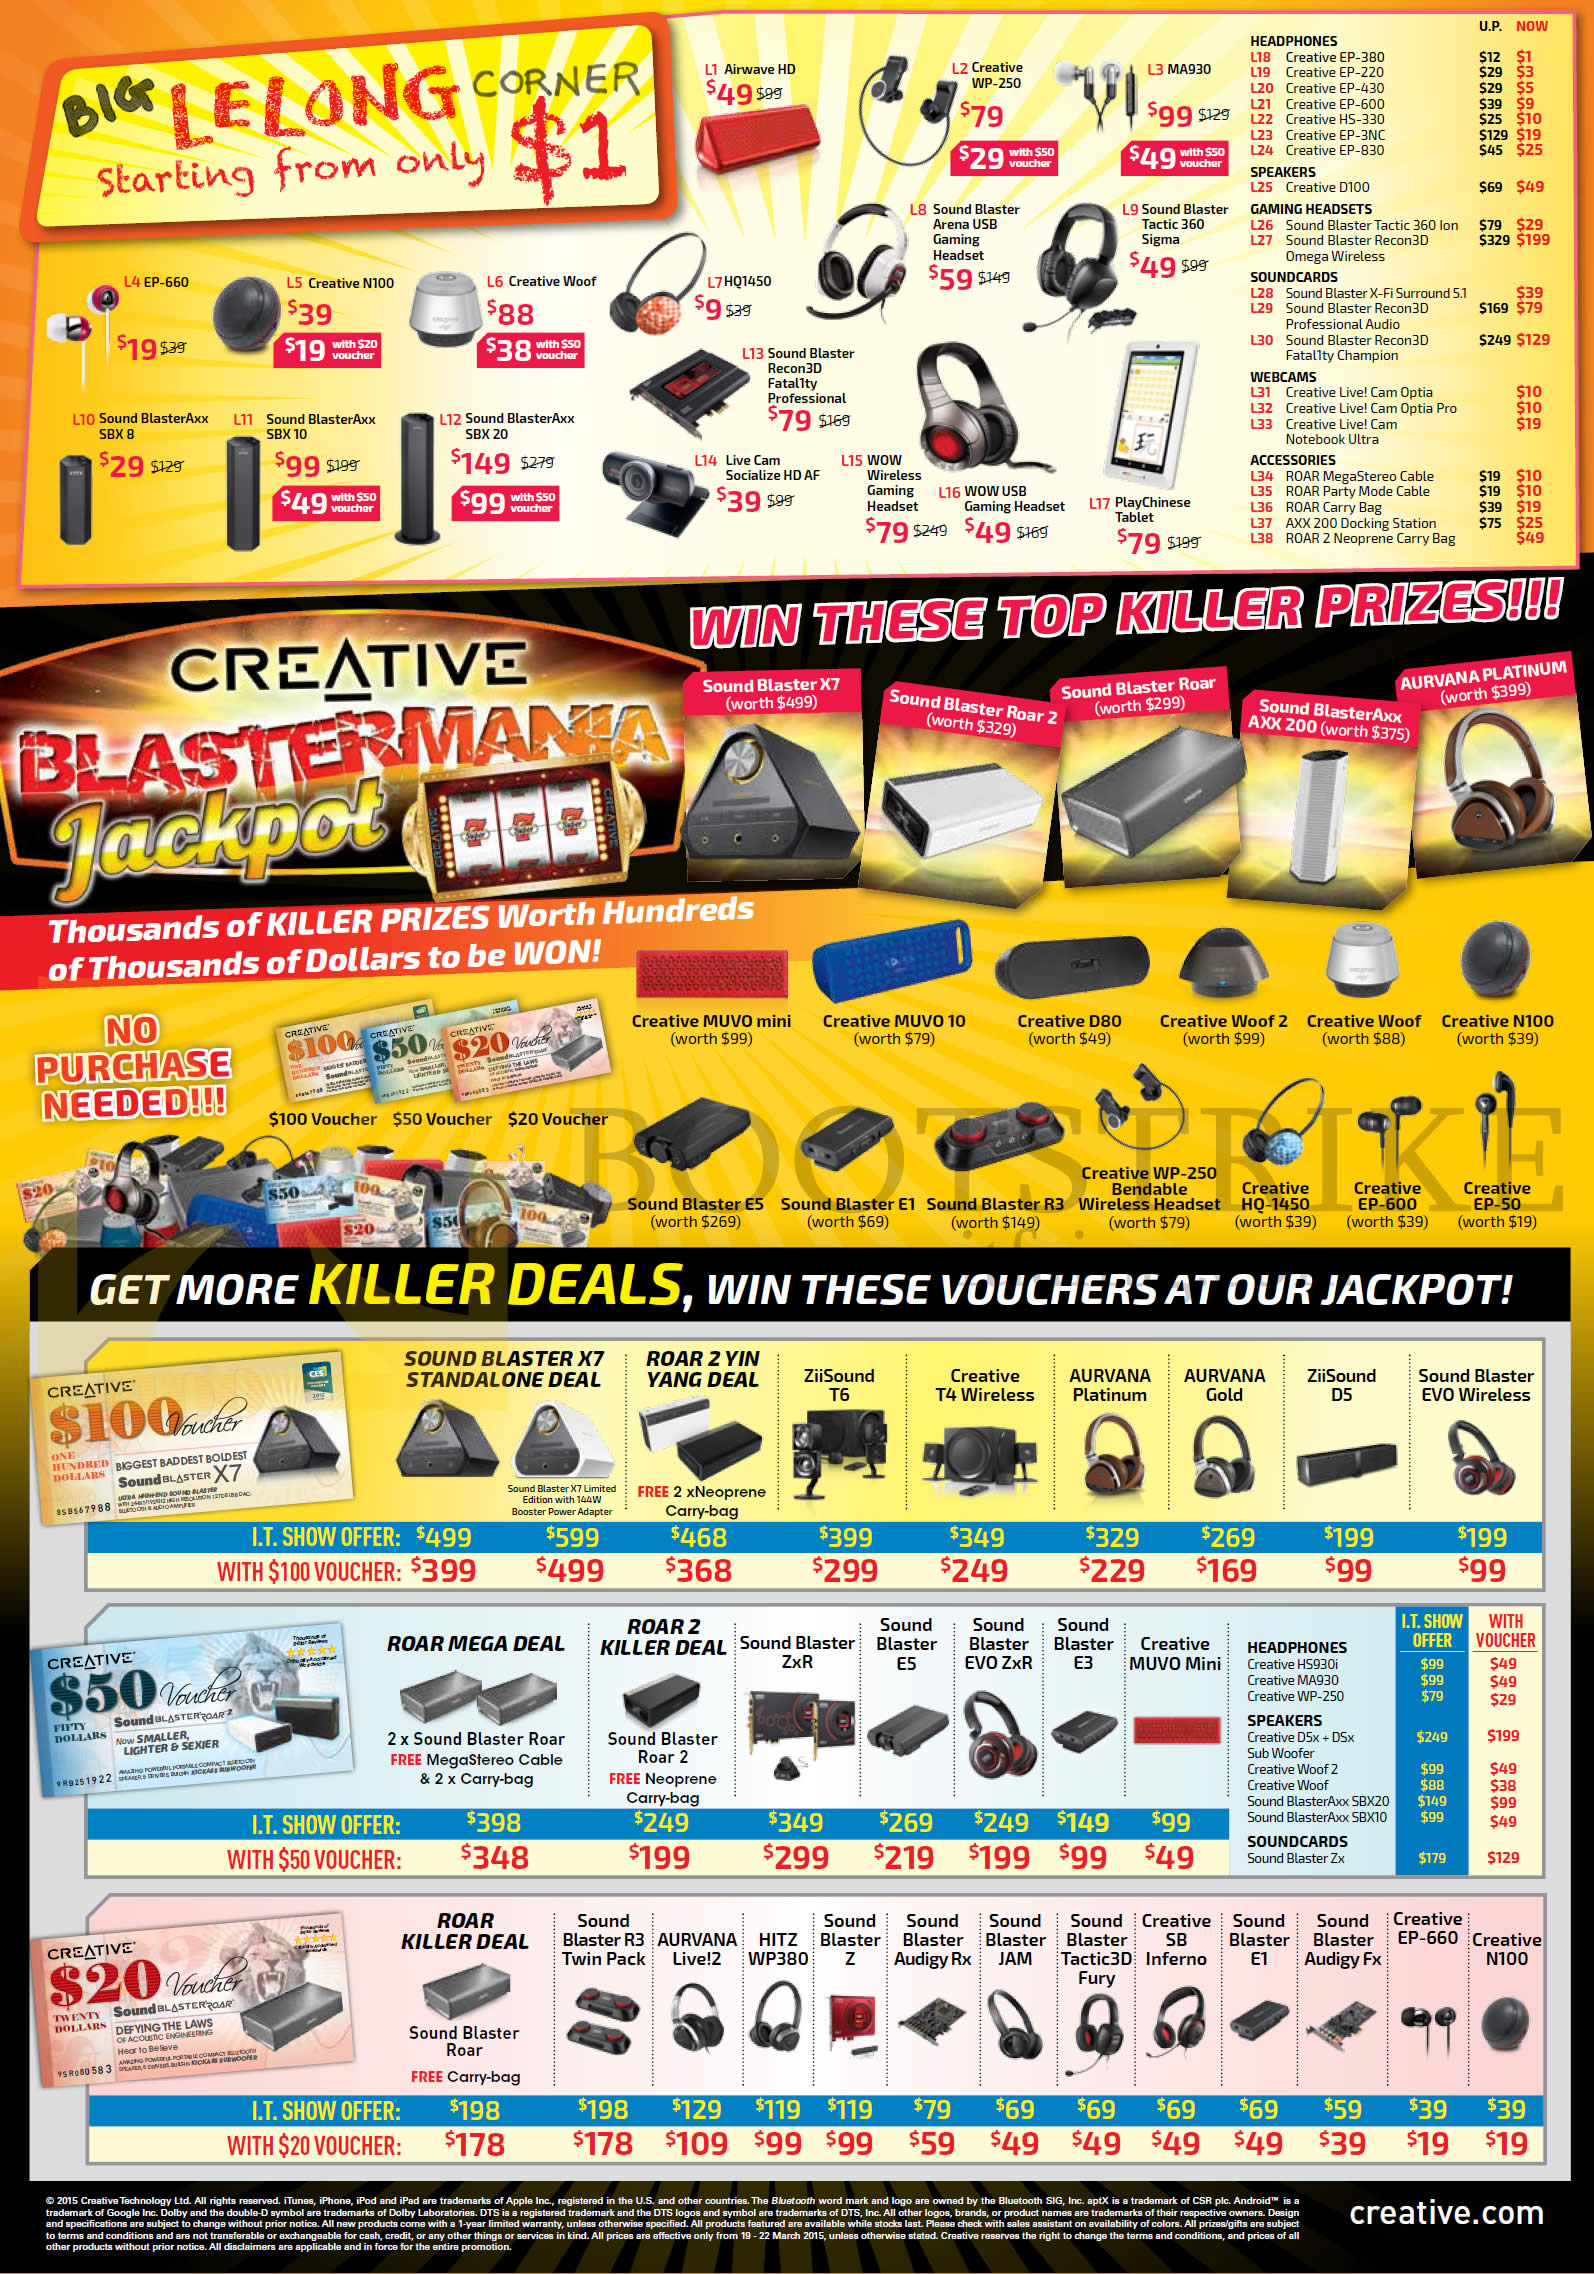 IT SHOW 2015 price list image brochure of Creative Lelong Corner, Killer Deals, Vouchers